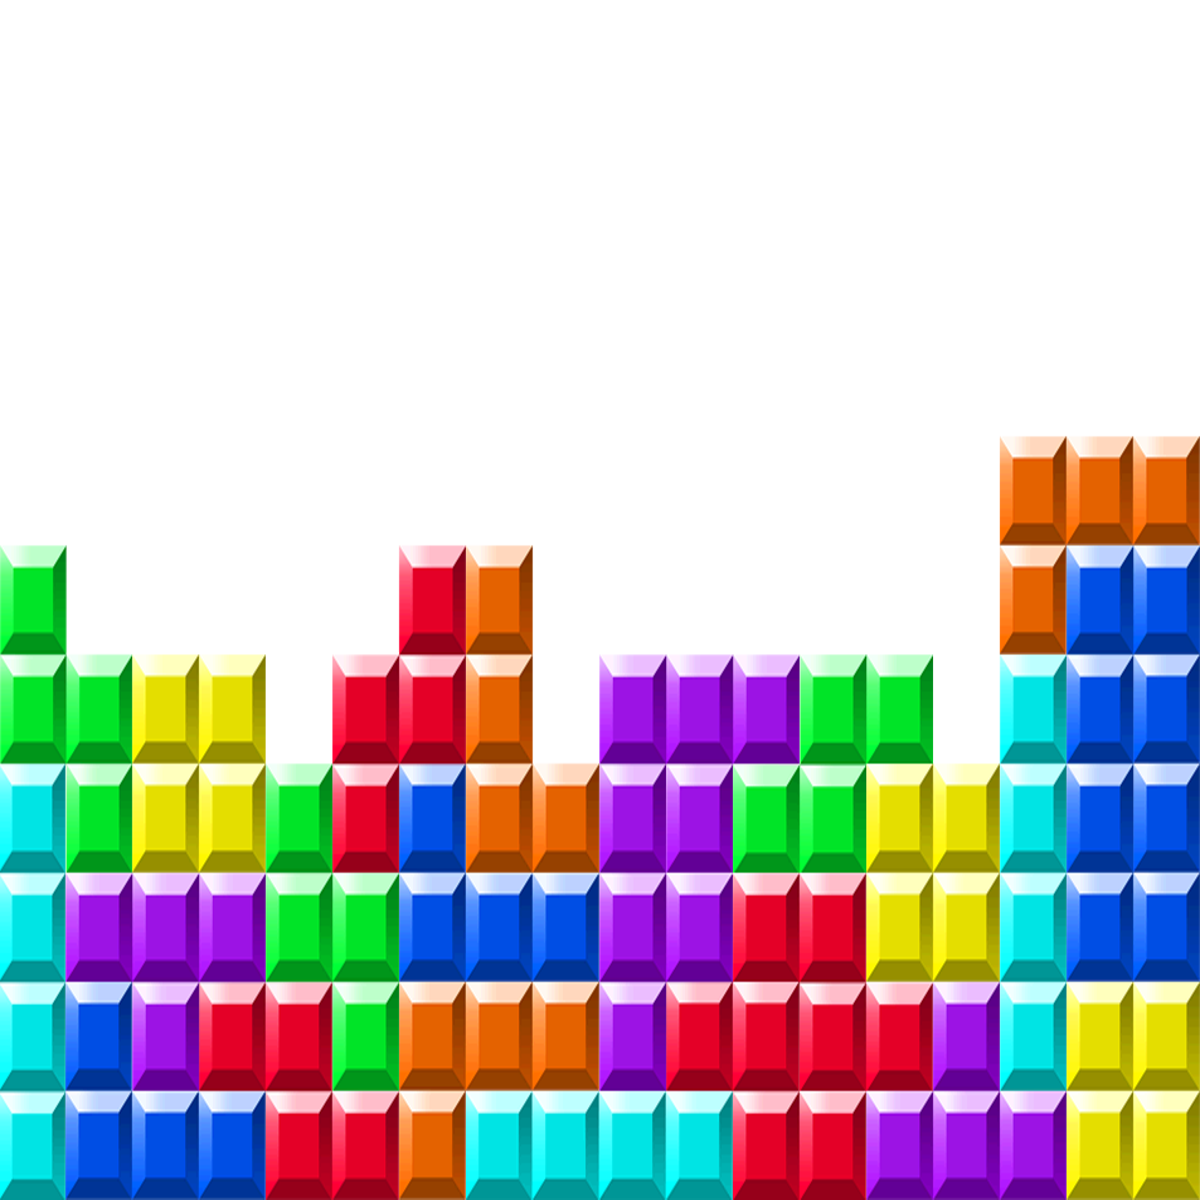 Future blockbuster? Tetris to become 'epic sci-fi' movie - CNET